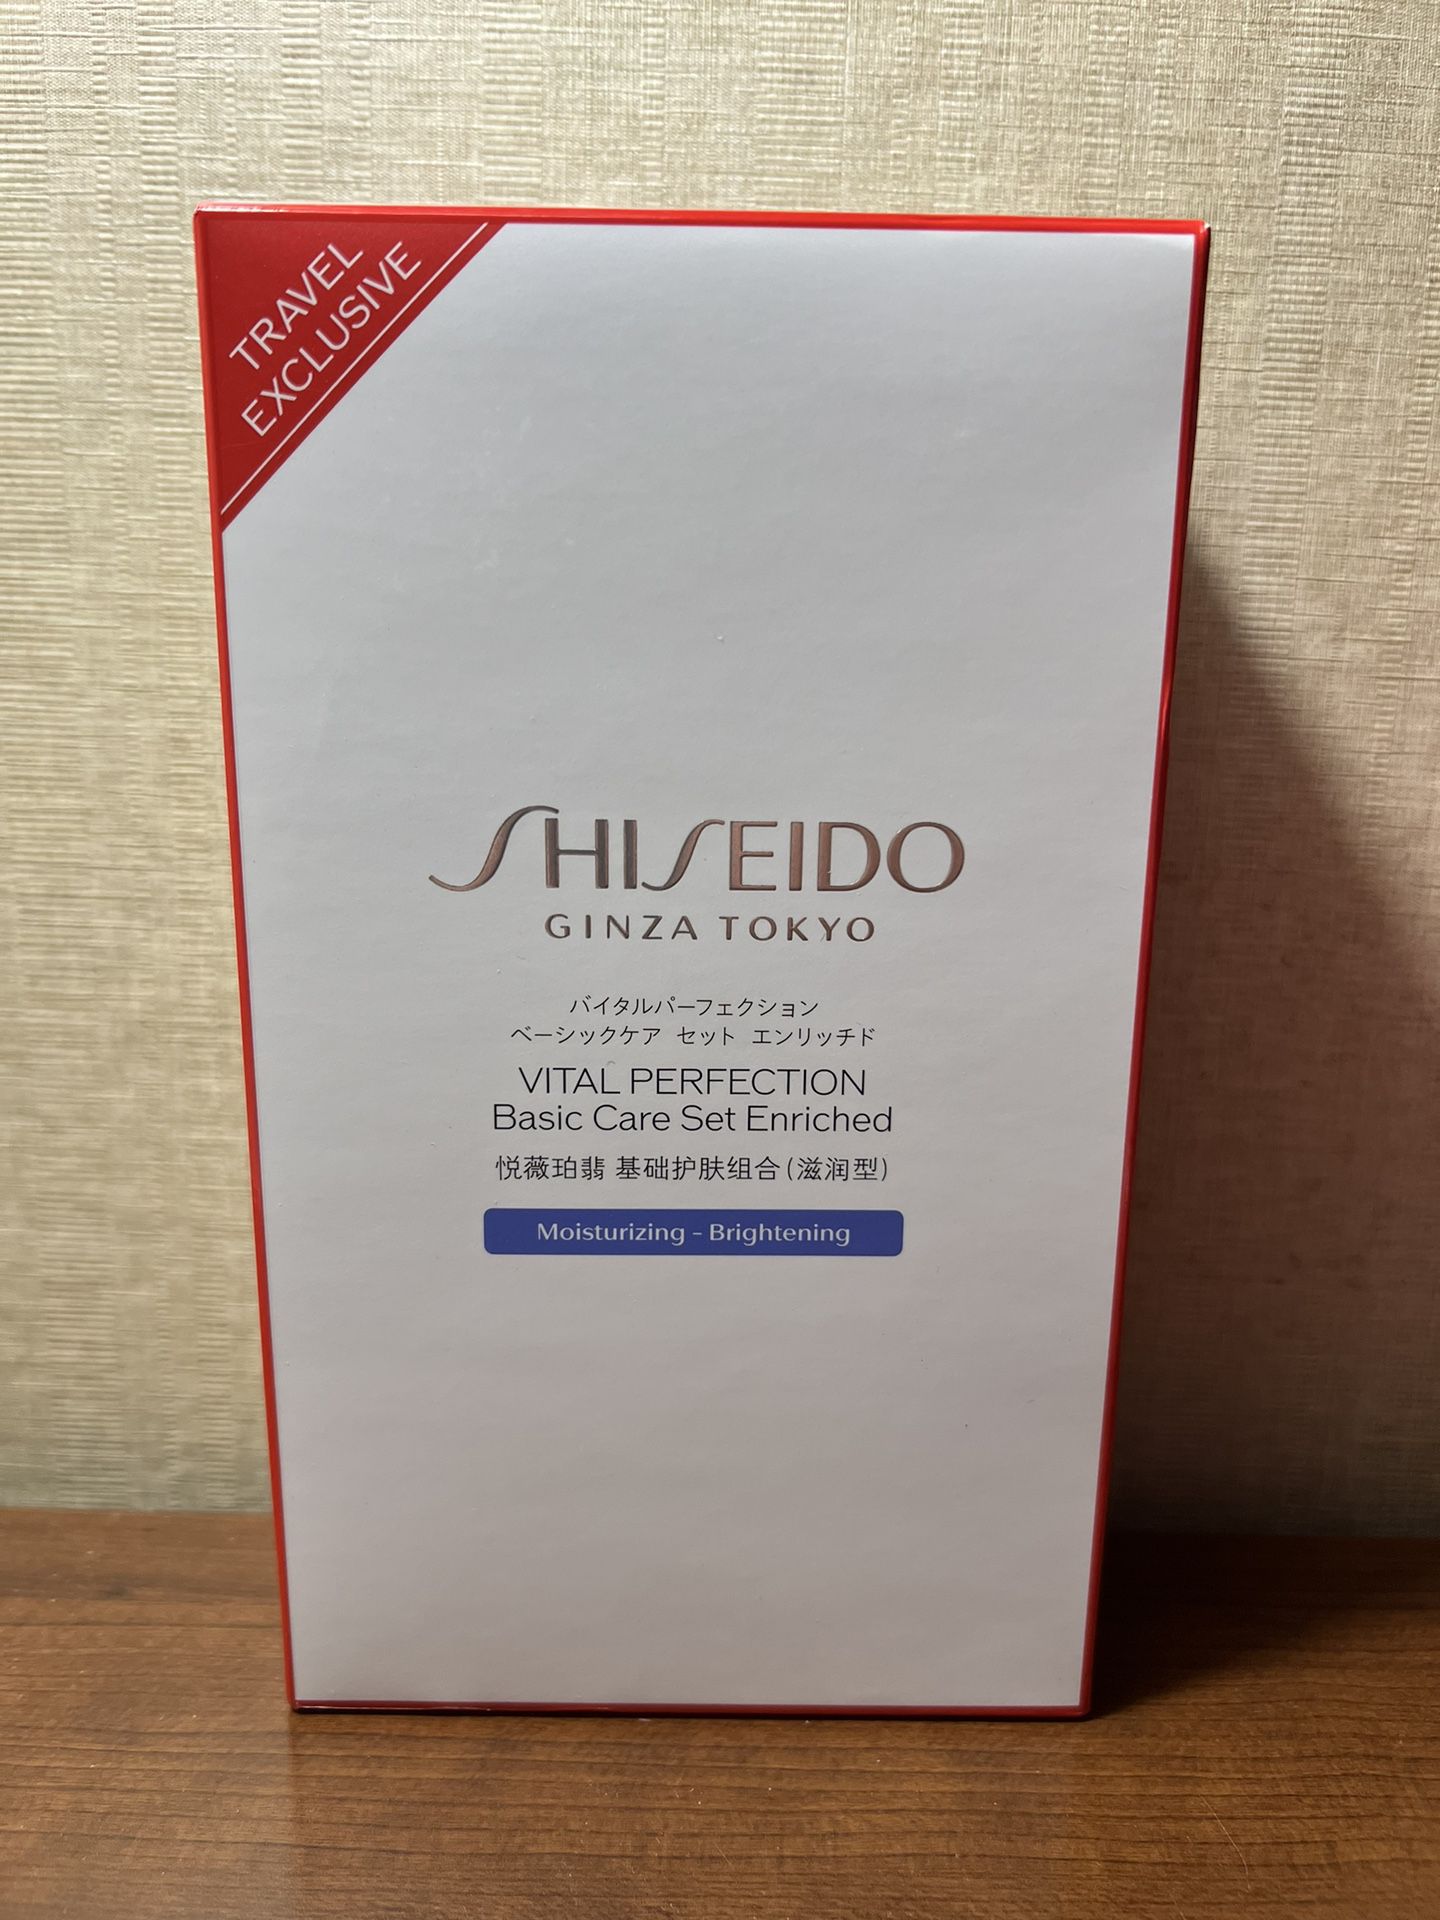 Shiseido Ginza Tokyo Vital Perfection Basic Care Set Enriched